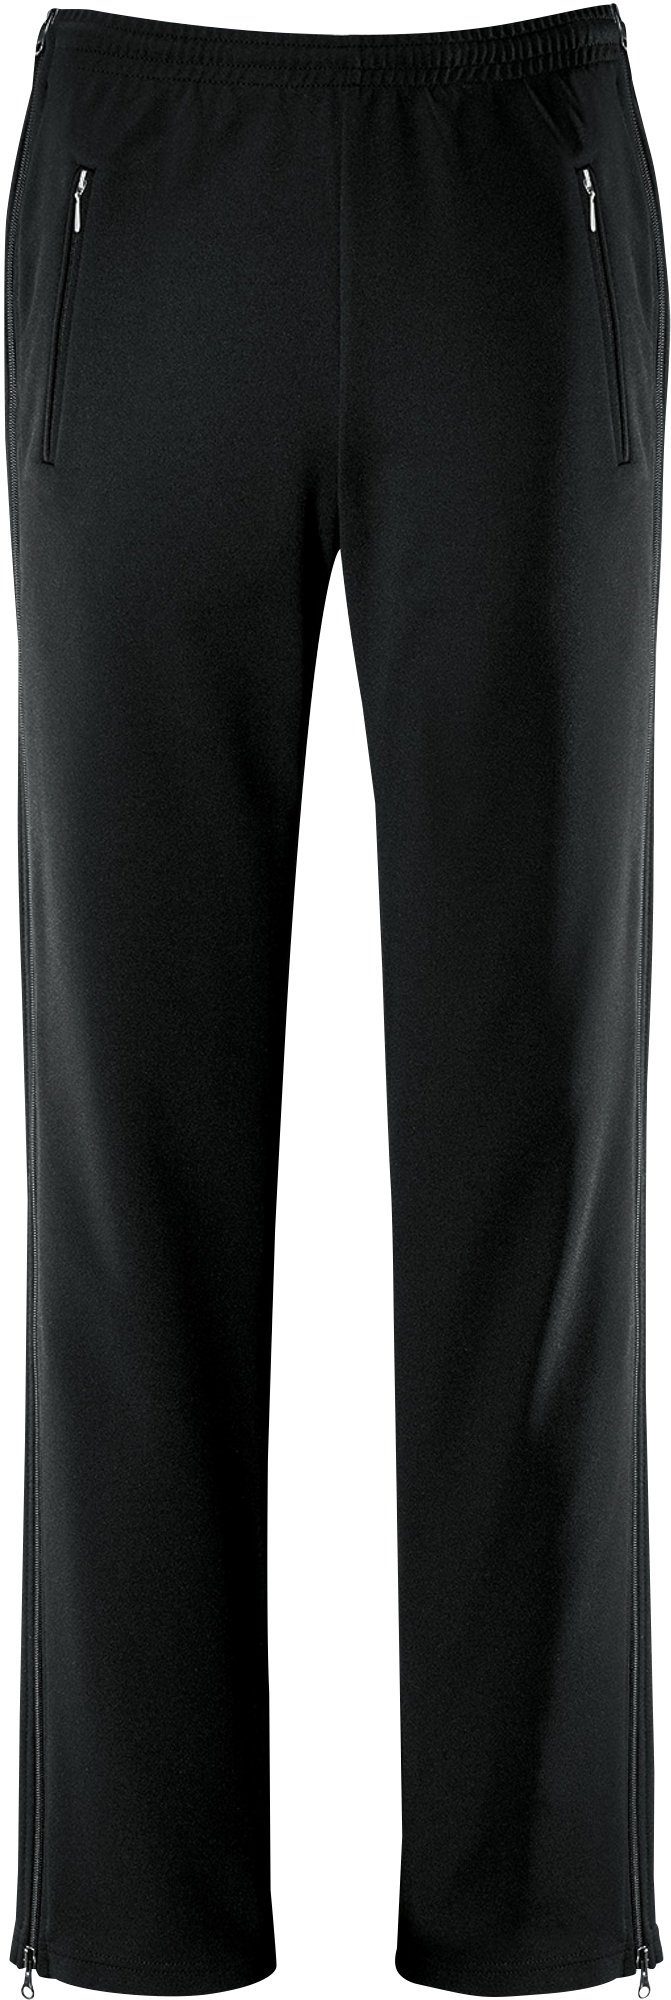 SCHNEIDER Jogginghose "GÖTEBORGW", Uni 999 Damen-Freizeithose schwarz Sportswear lang